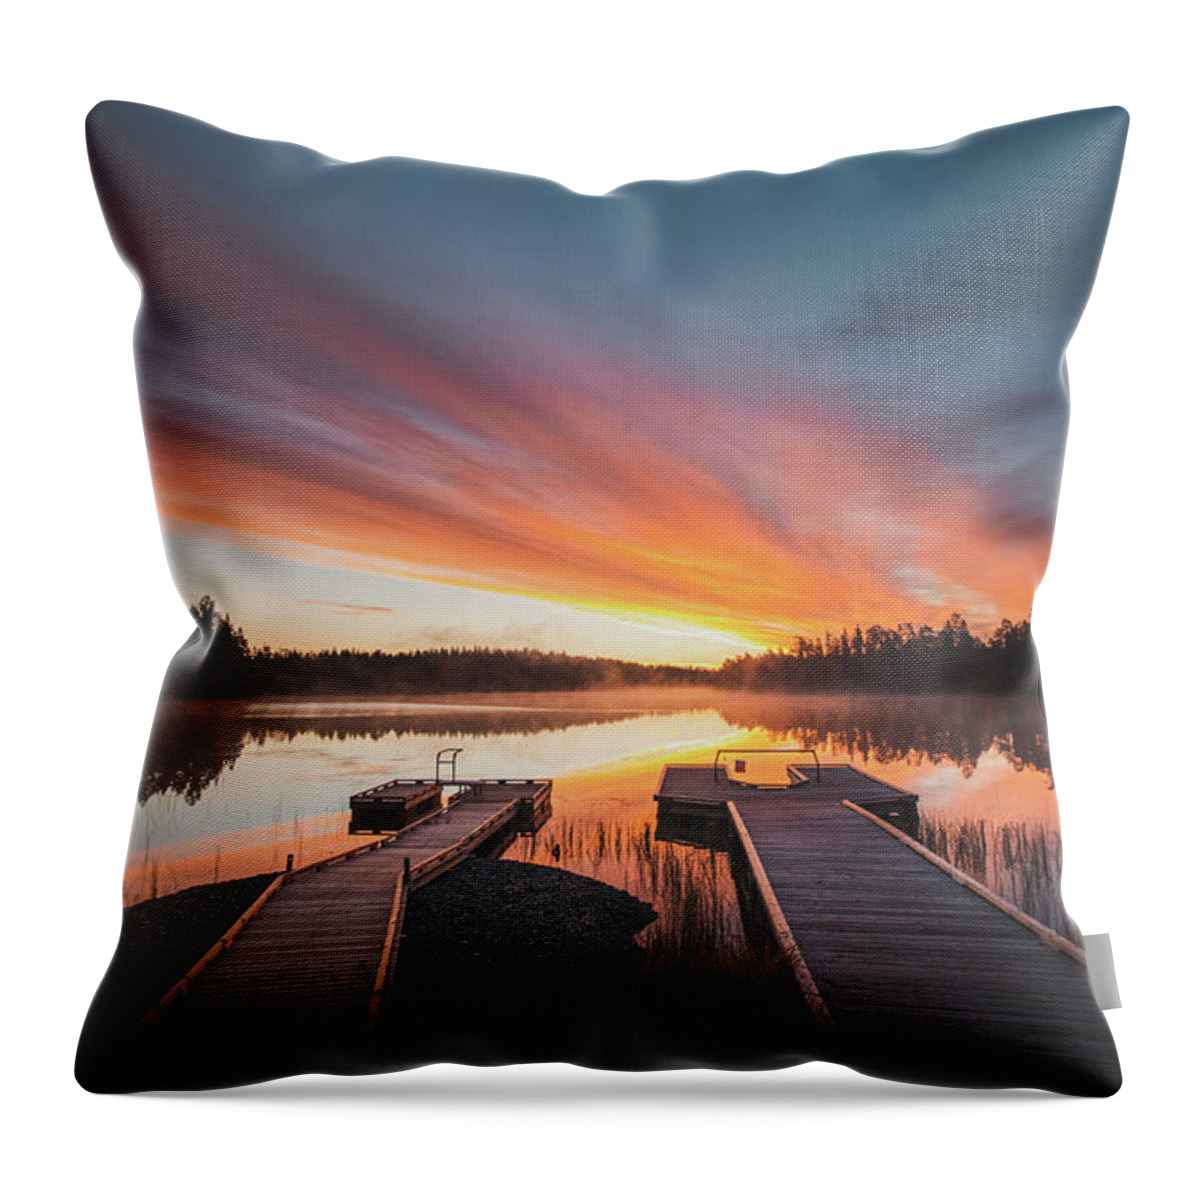 Lake Jatkonjärvi Throw Pillow featuring the photograph Hell on a Finnish lake by Vaclav Sonnek